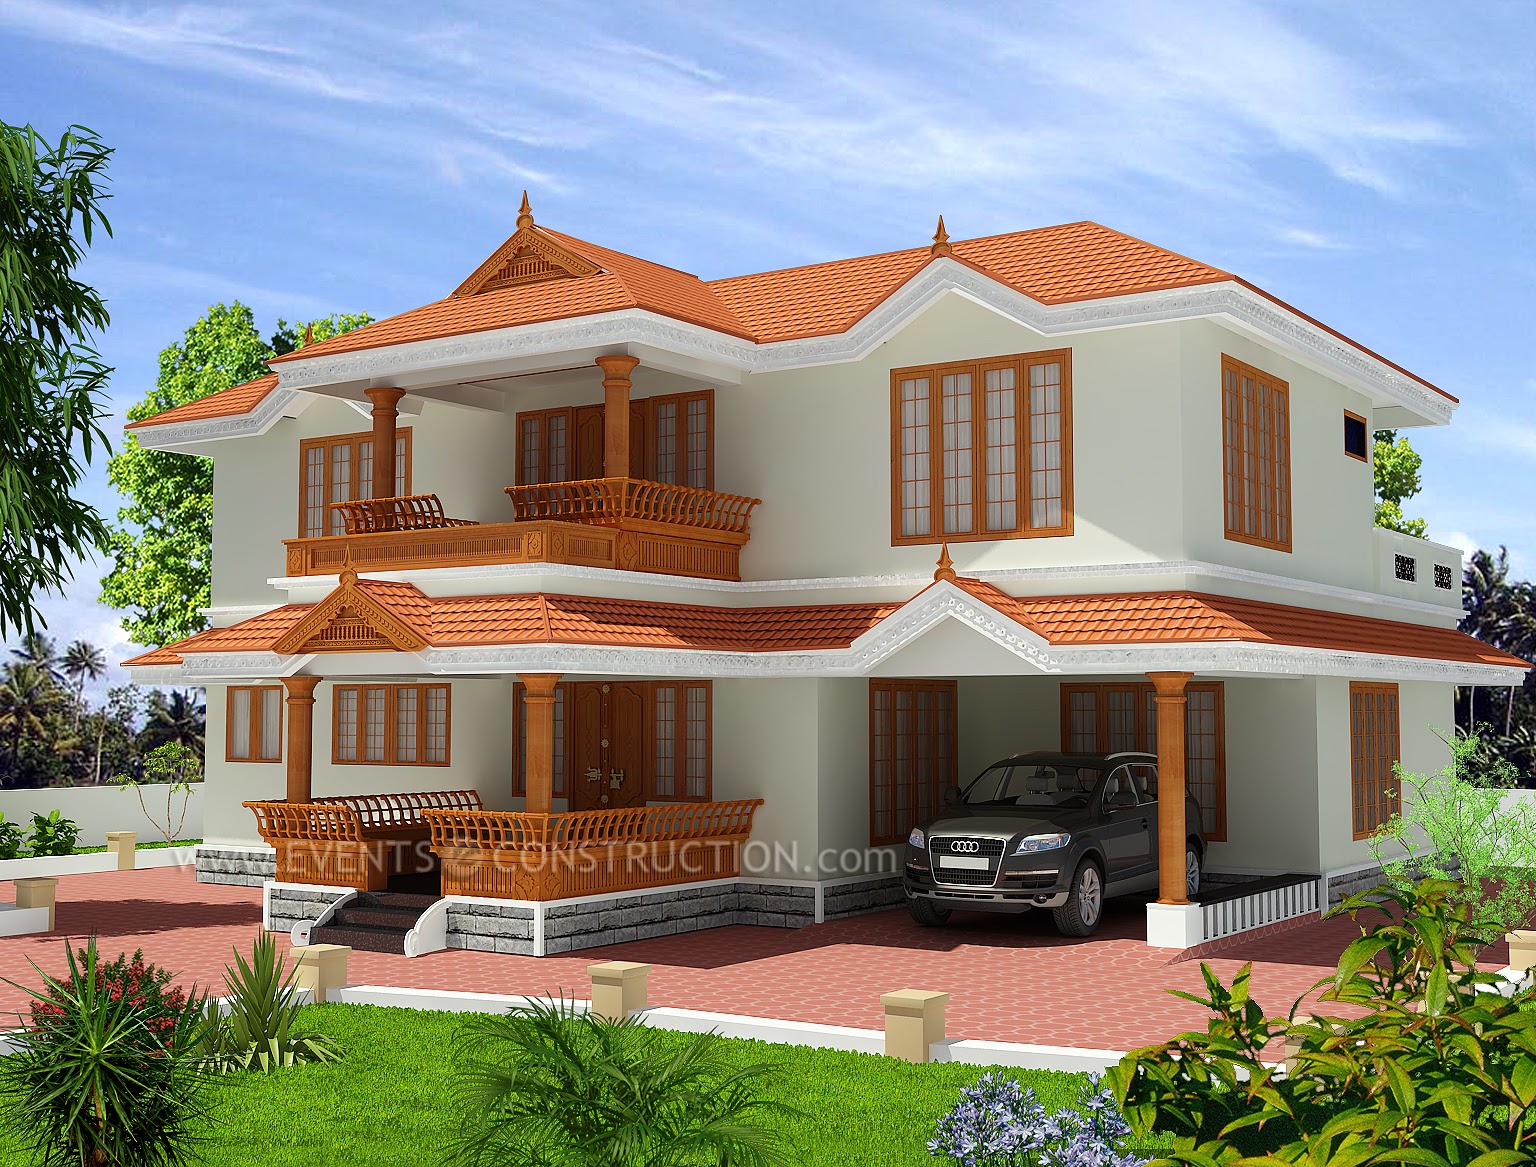 Evens Construction Pvt Ltd: Traditional Kerala home in 2346 SqFt